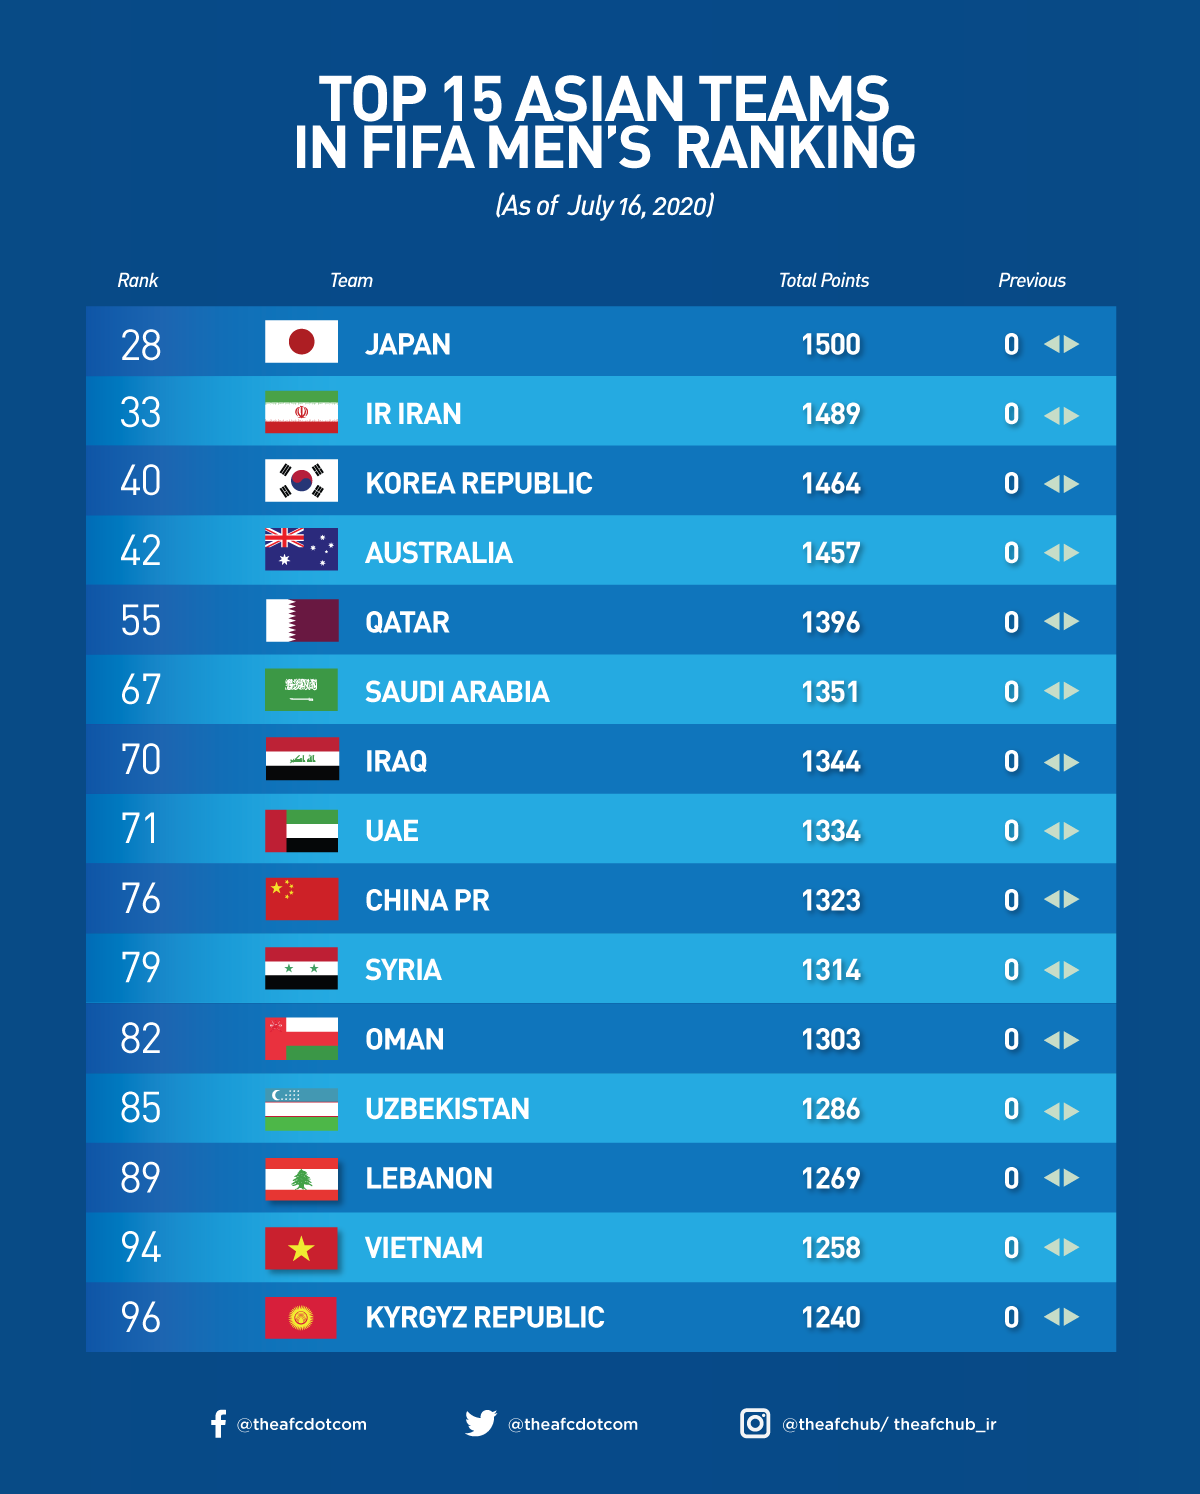 FIFA regional rankings for Asia in July 2020.